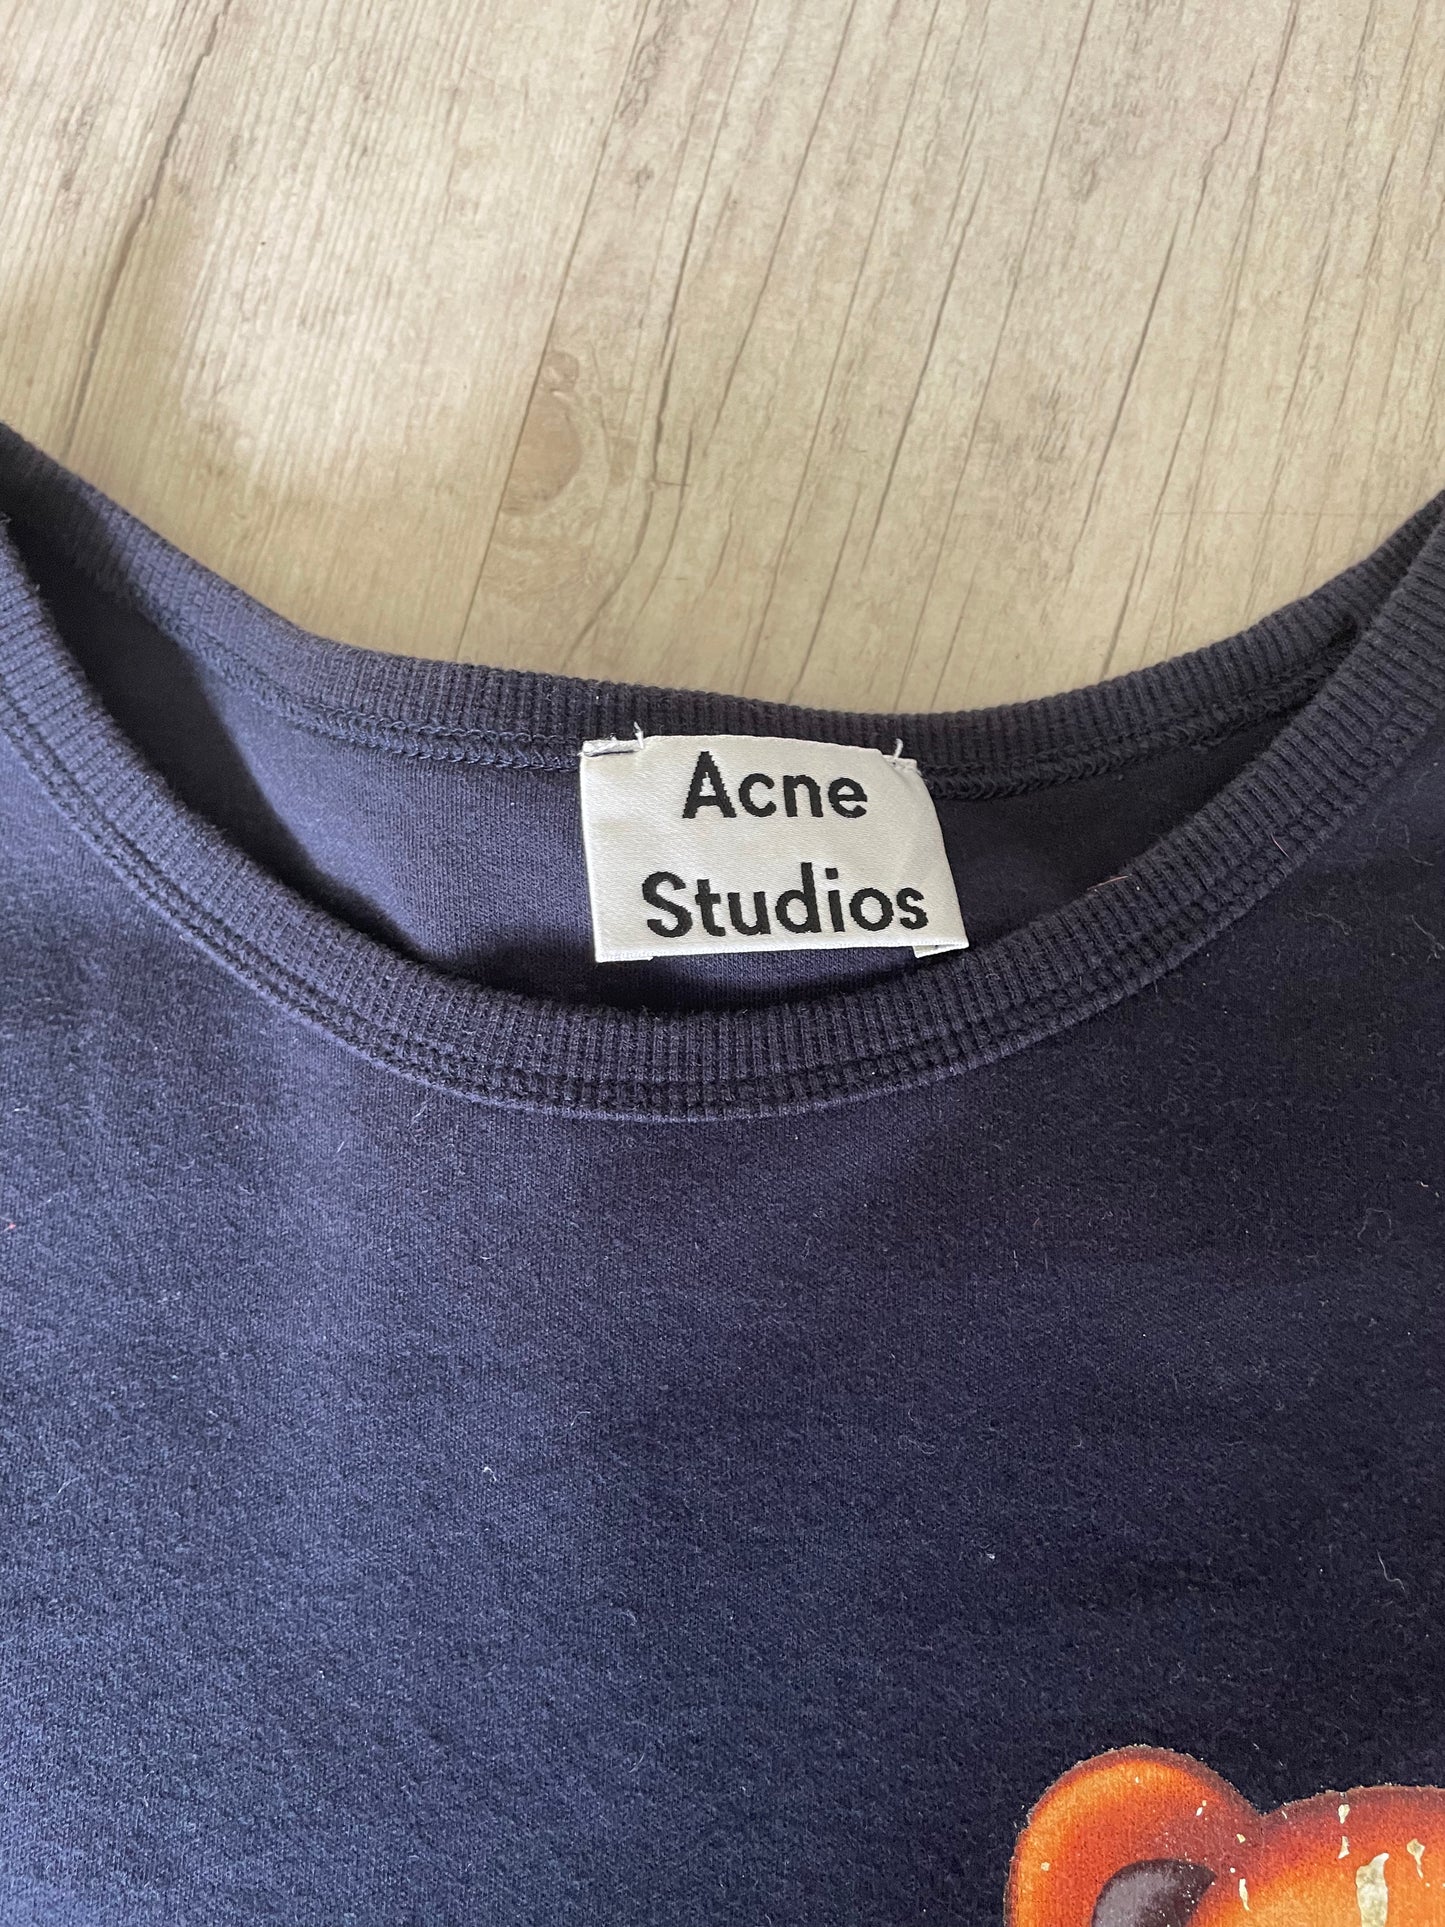 Acne Studios Niagara Bear SS17 T-shirt